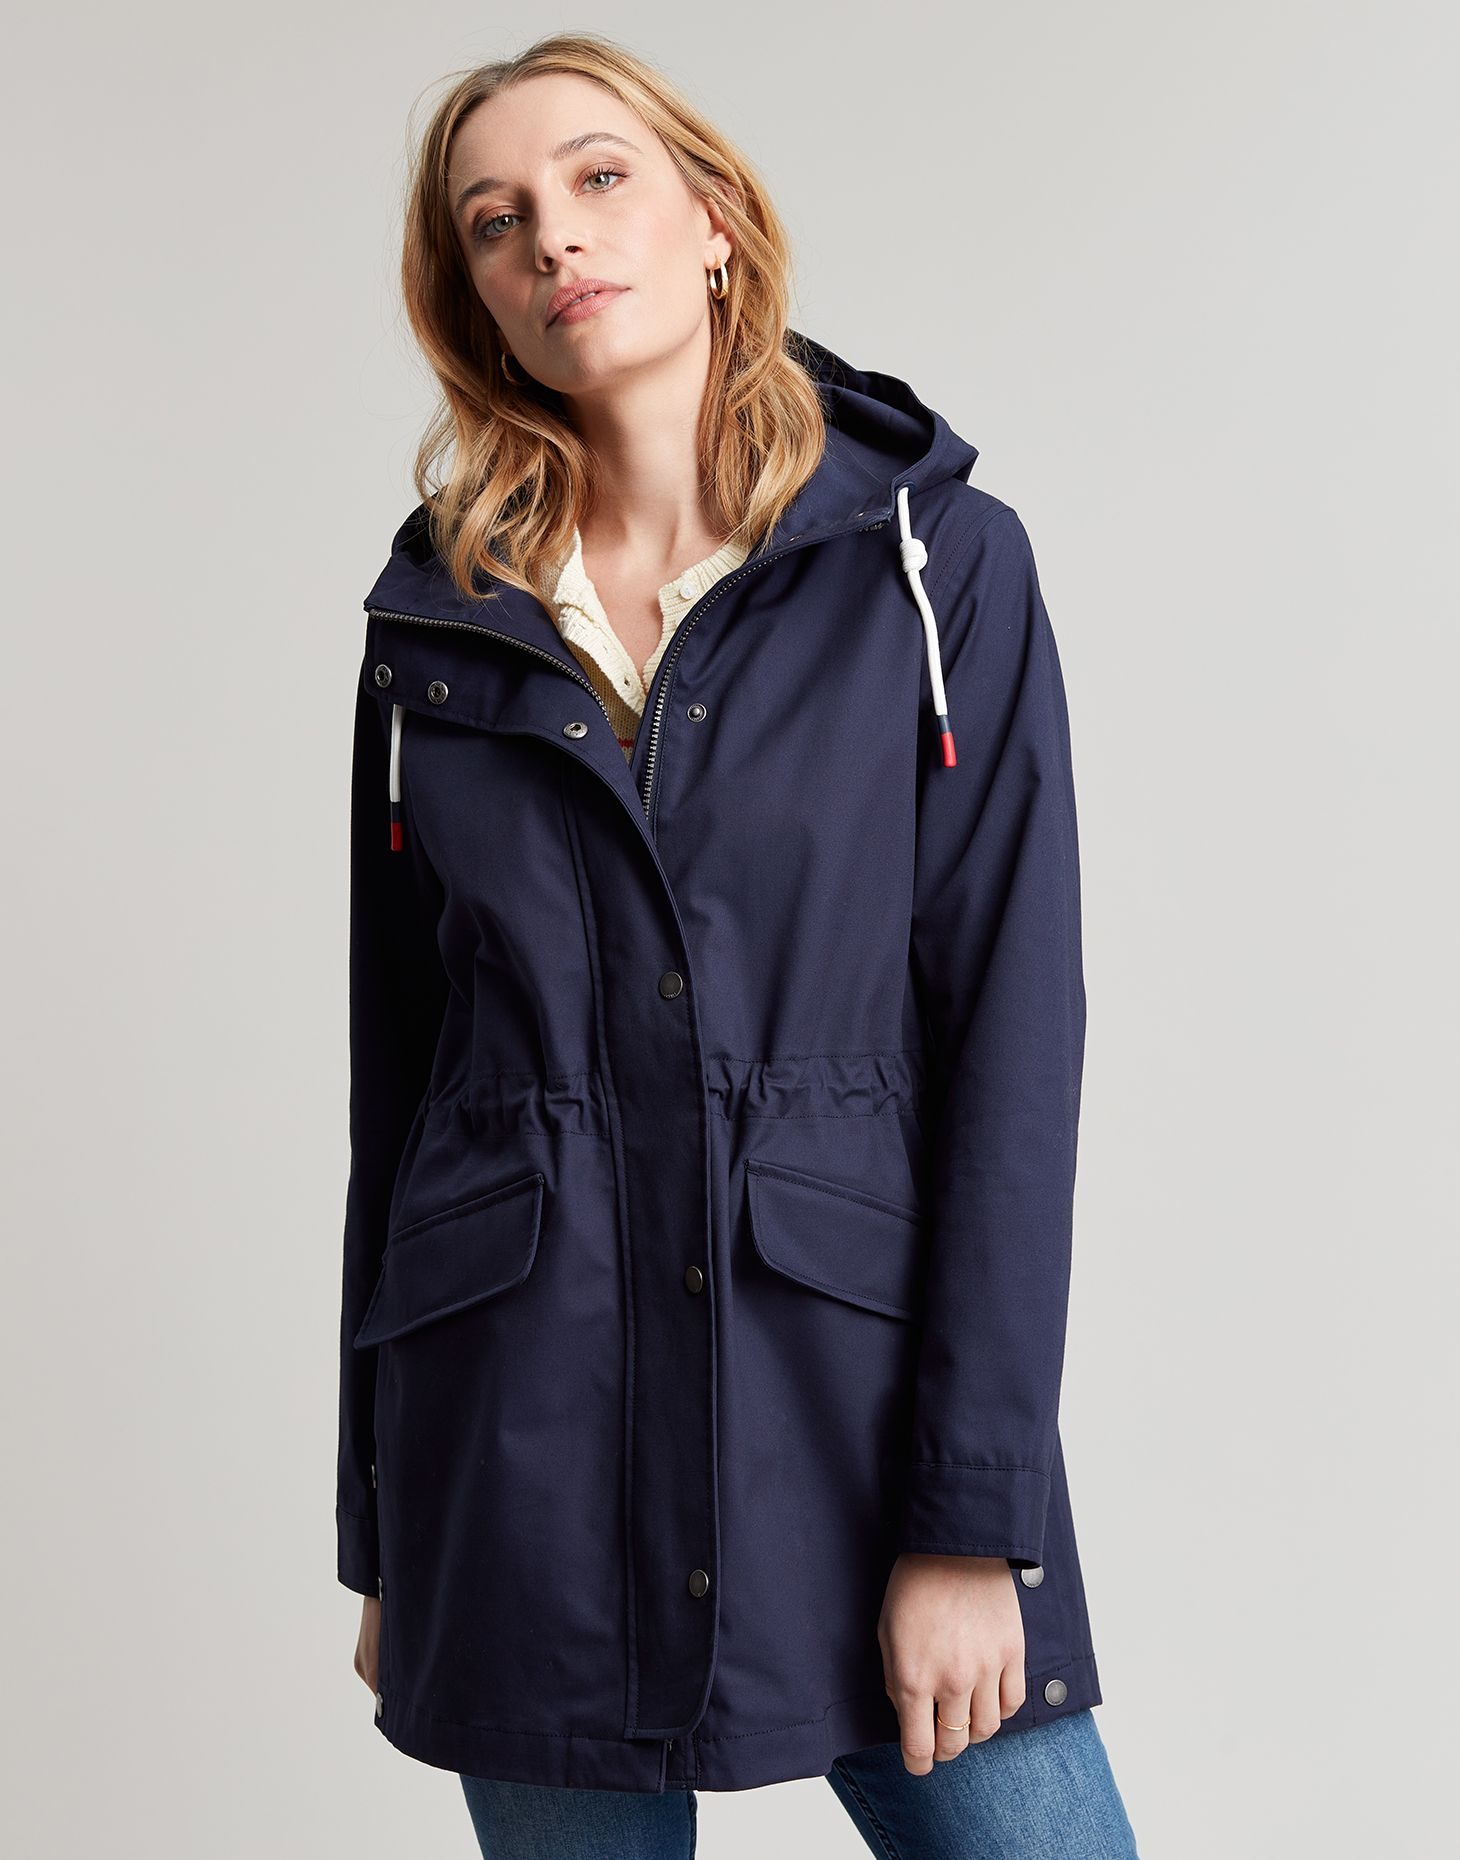 Joules Padstow Raincoat French Navy - Jackets, Coats & Gilets - Mole Avon